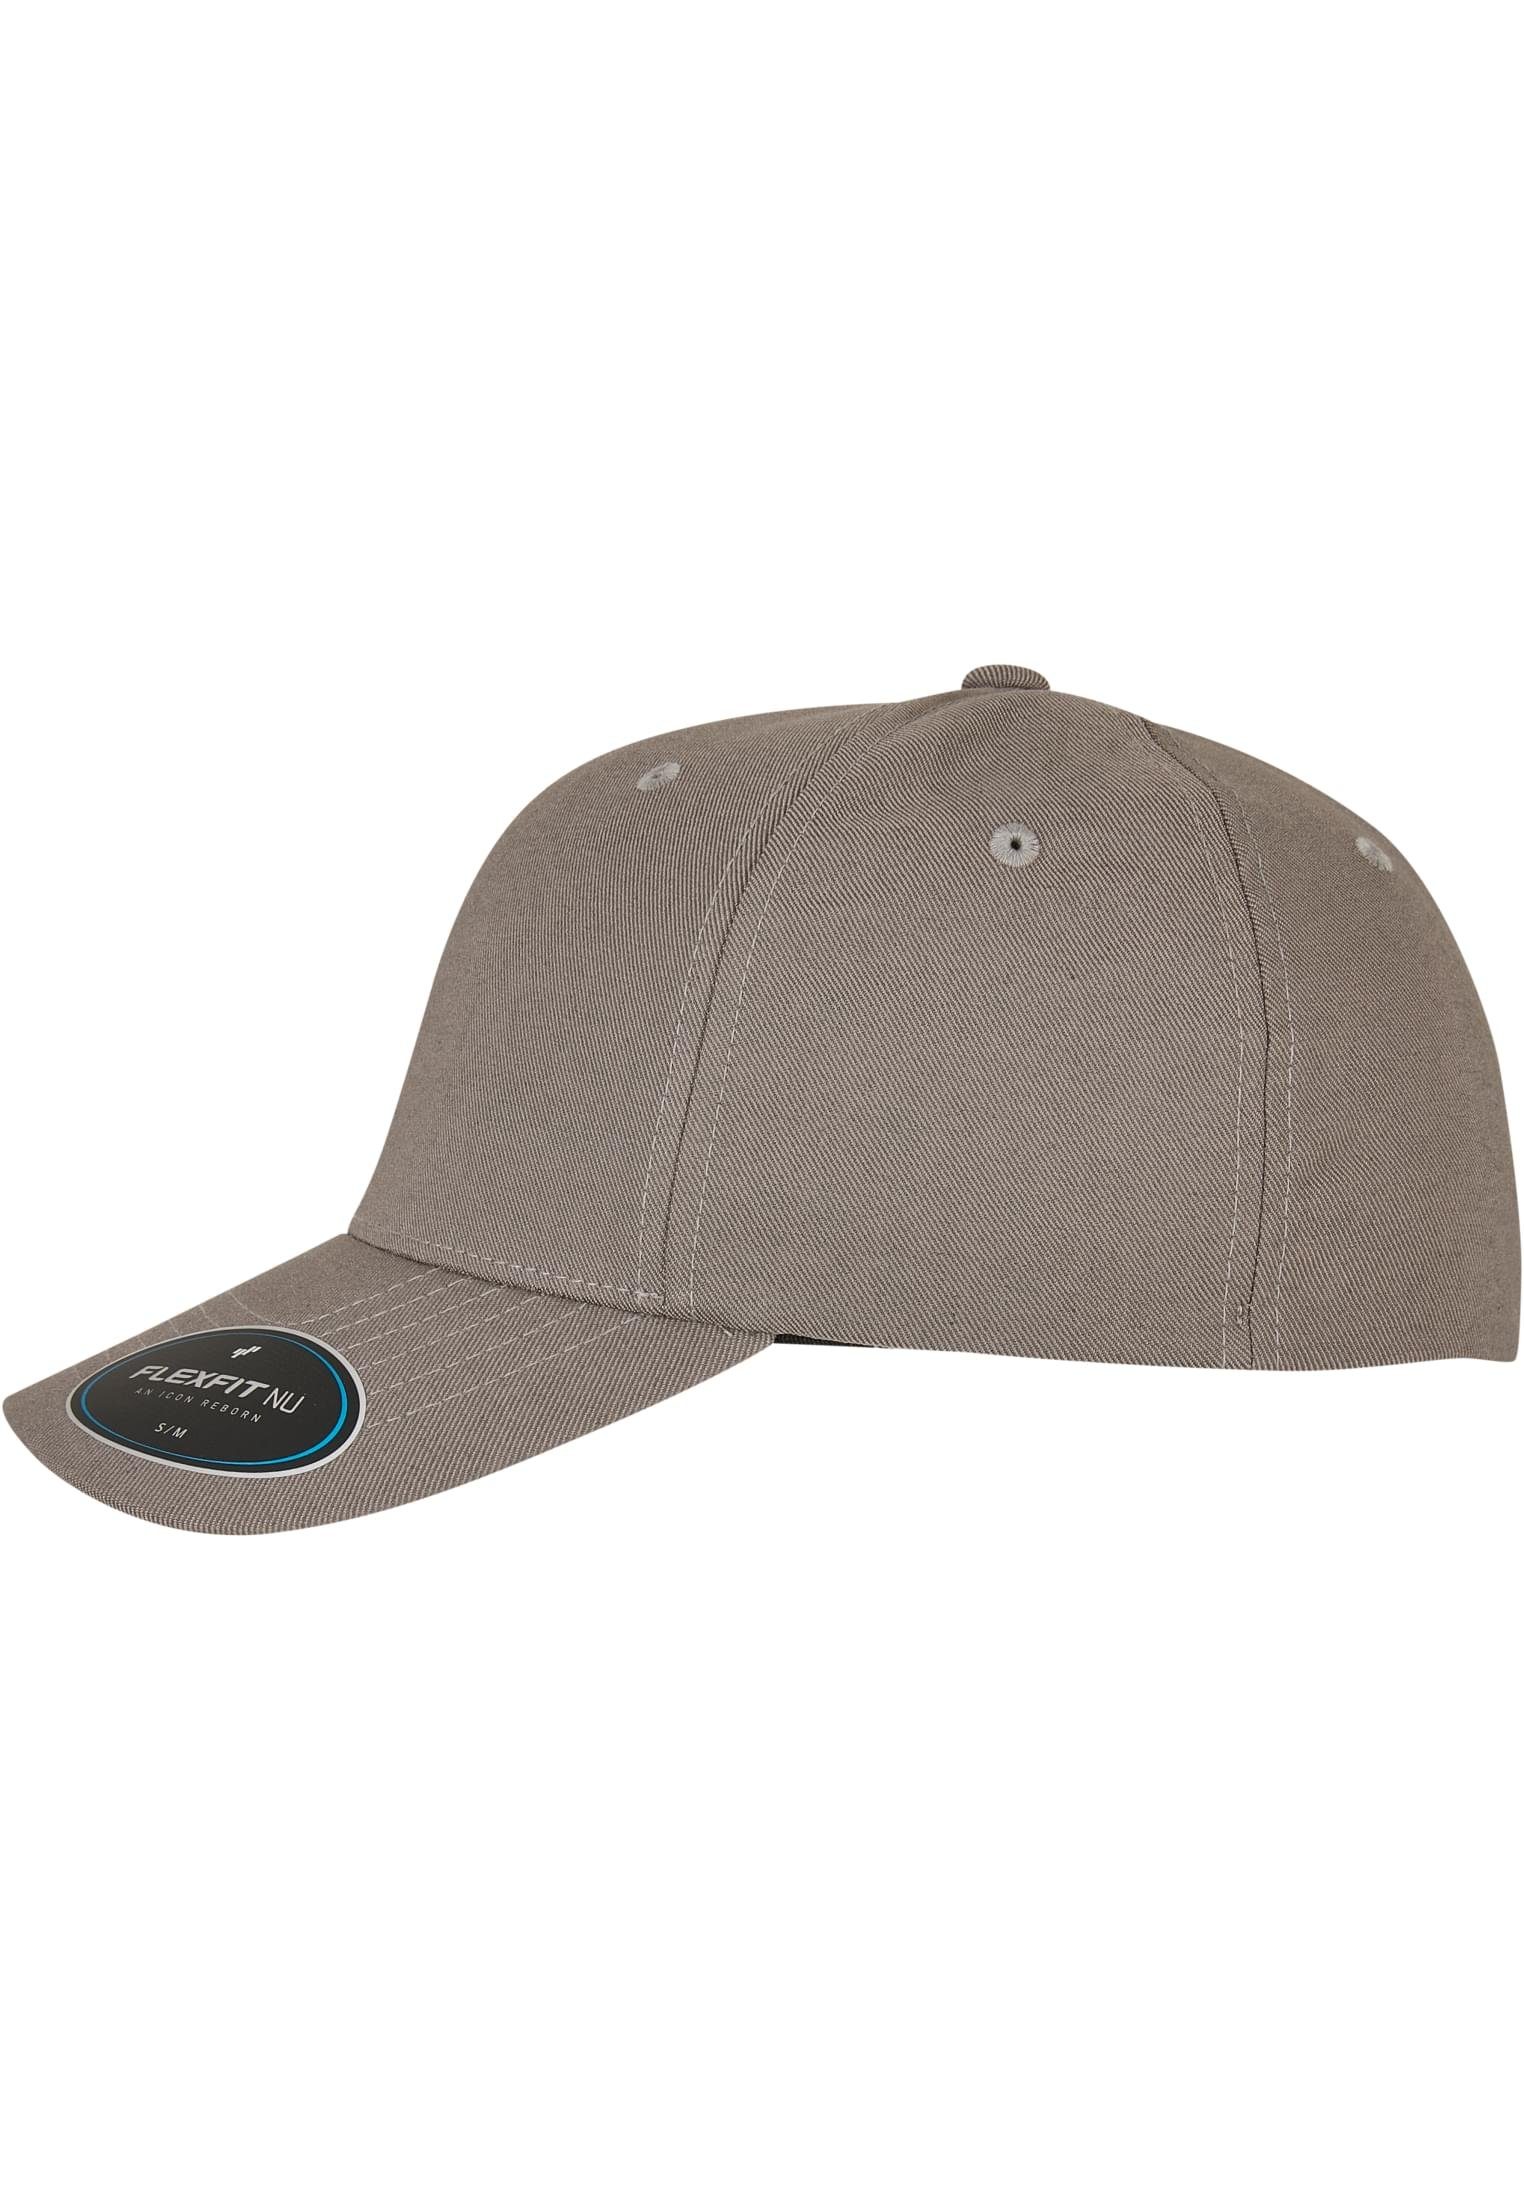 FLEXFIT Accessoires Flex CAP Cap NU® Flexfit grey